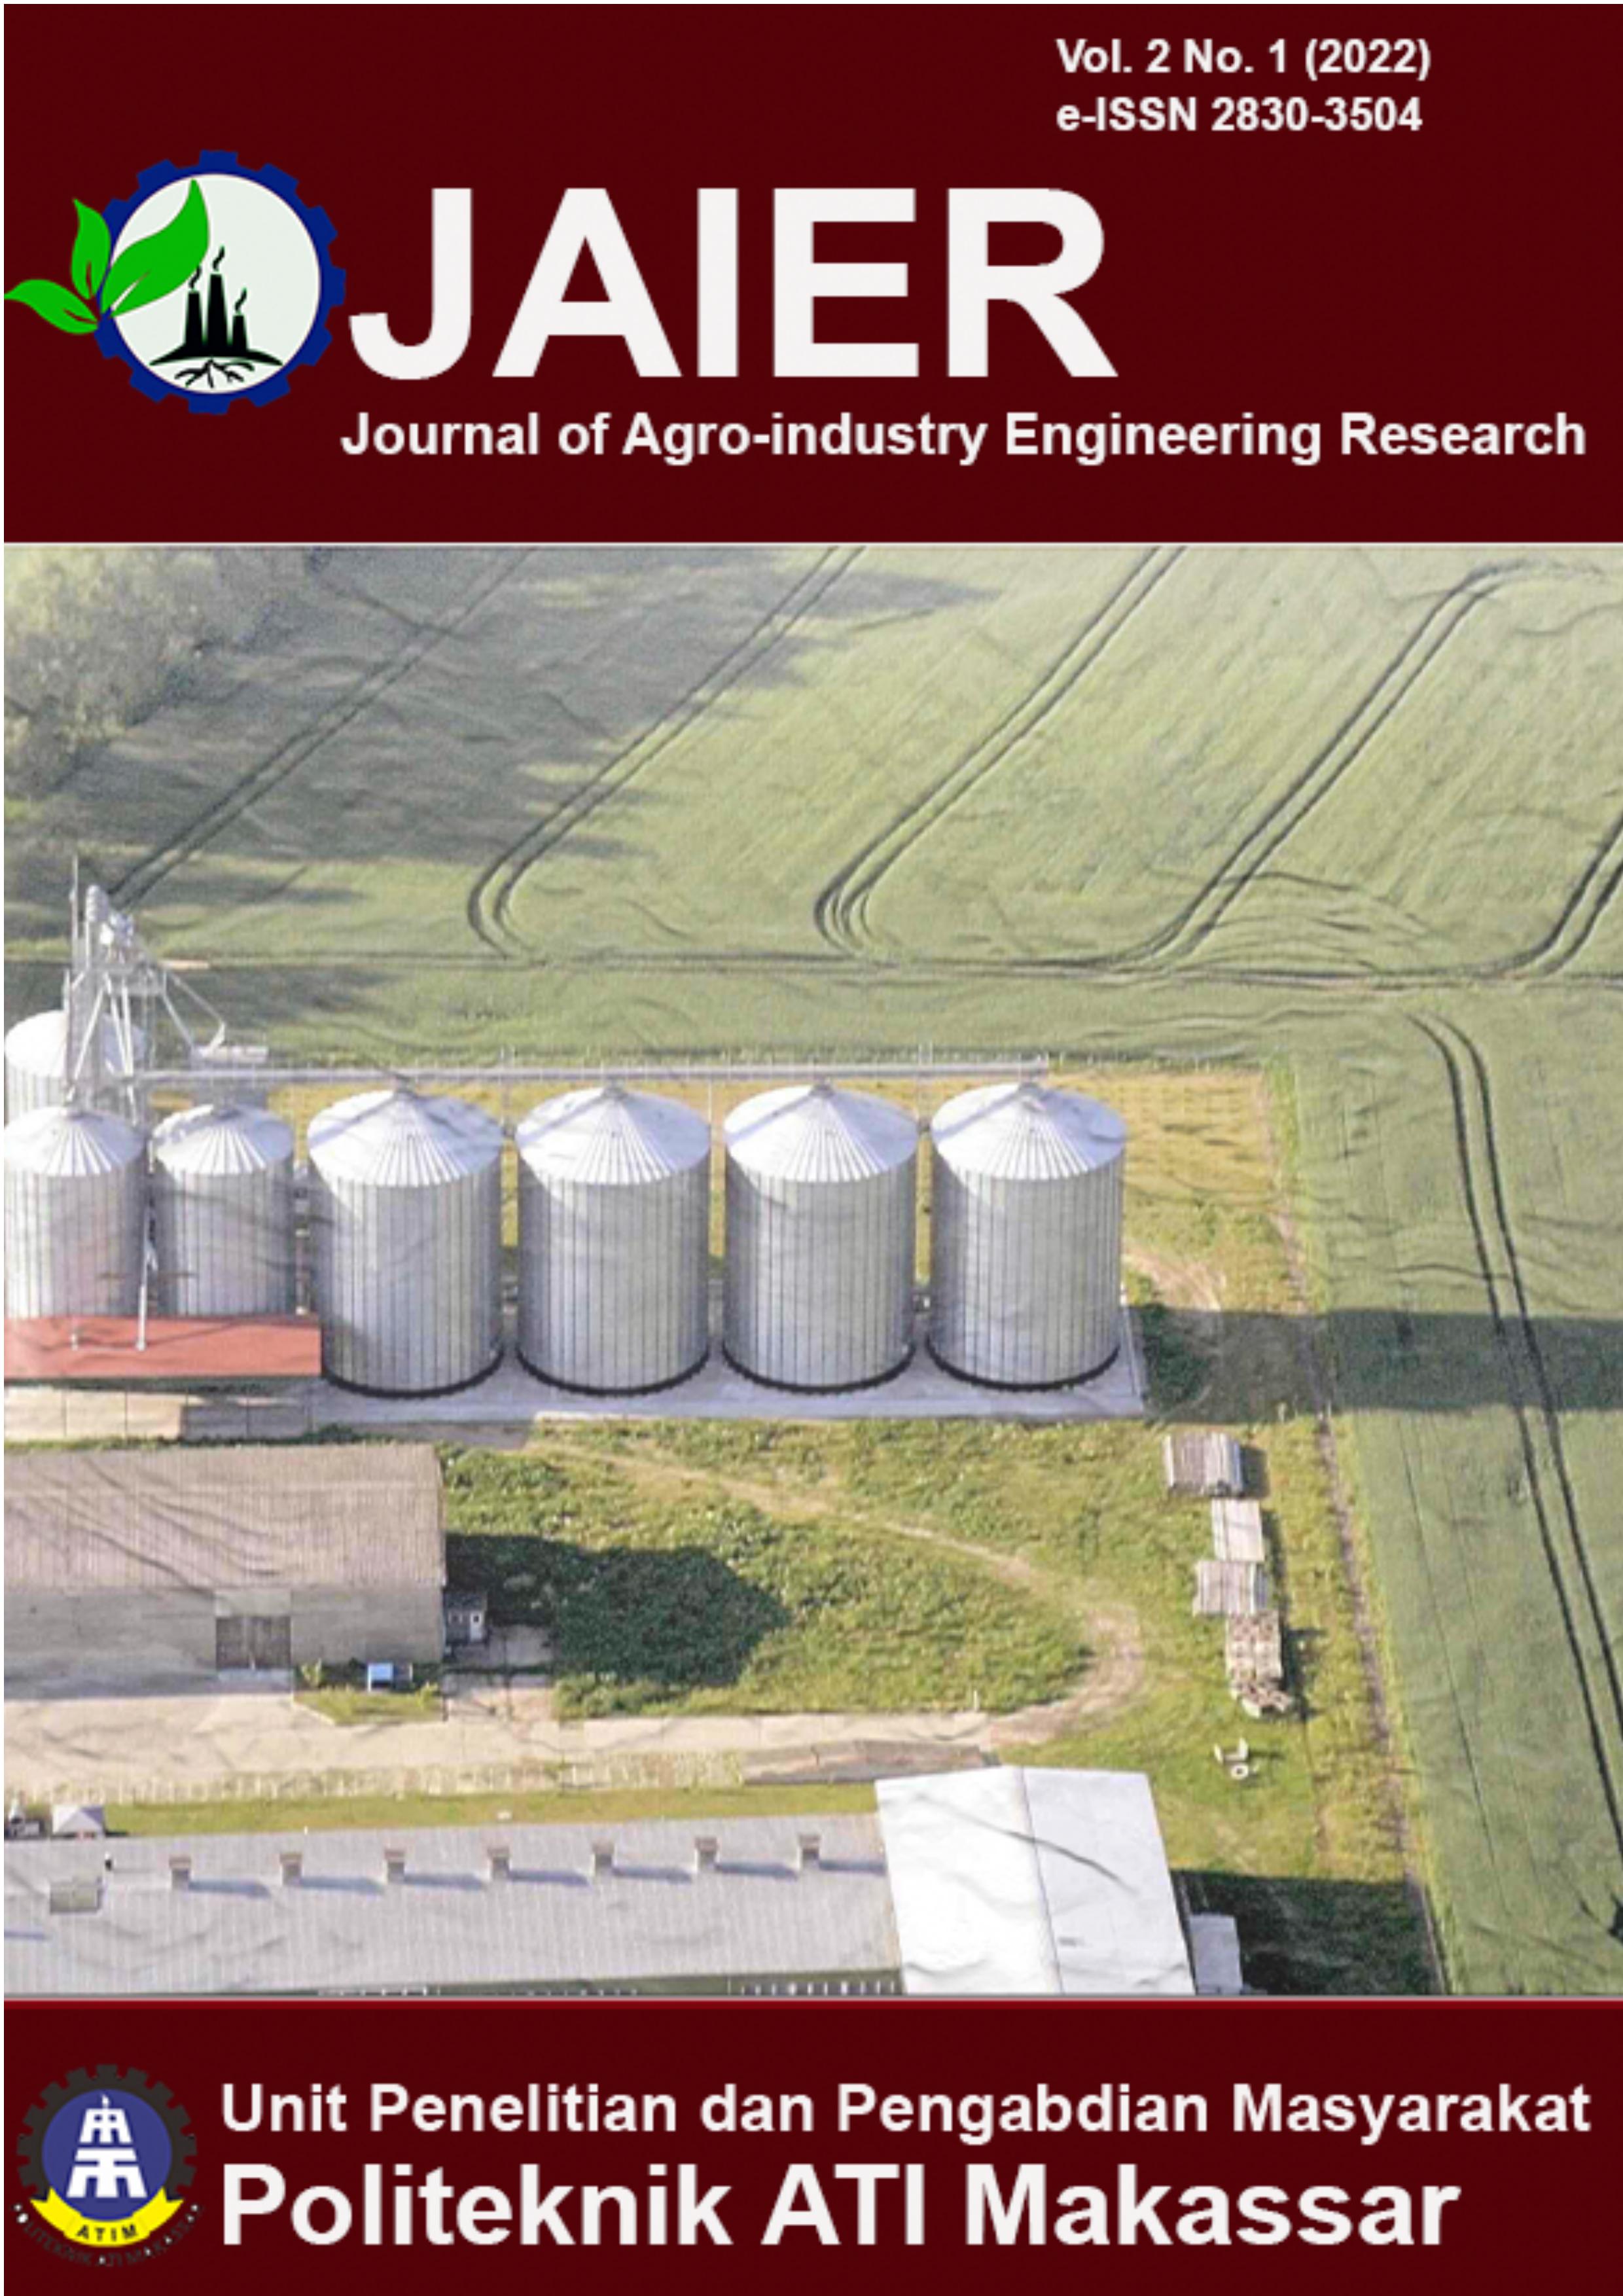 					Lihat Vol 1 No 2 (2022): Vol 1 No 2 (2022): Journal of Agro-Industry Engineering Research
				